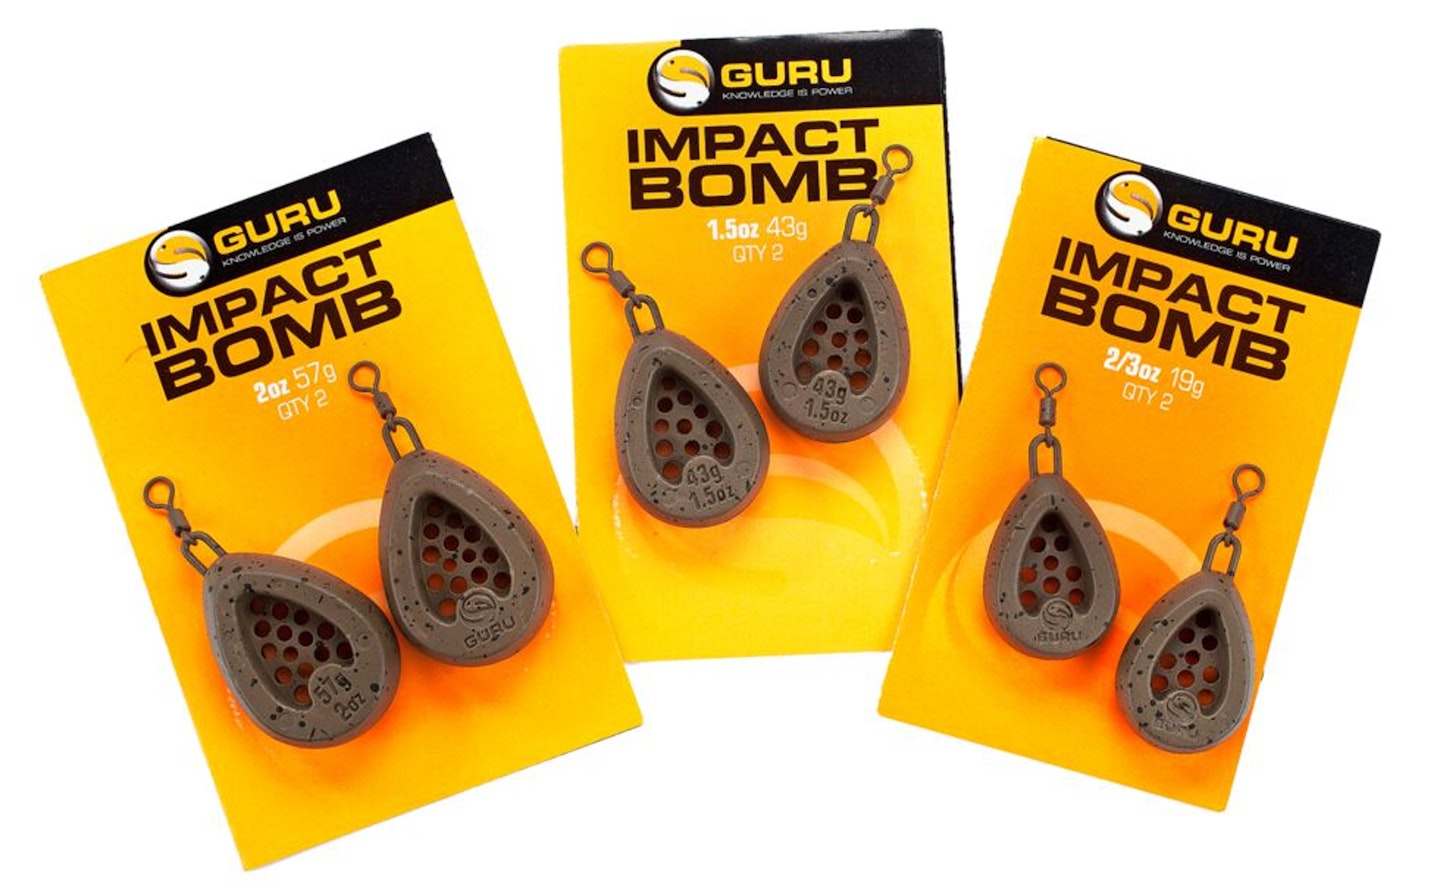 GURU IMPACT BOMBS